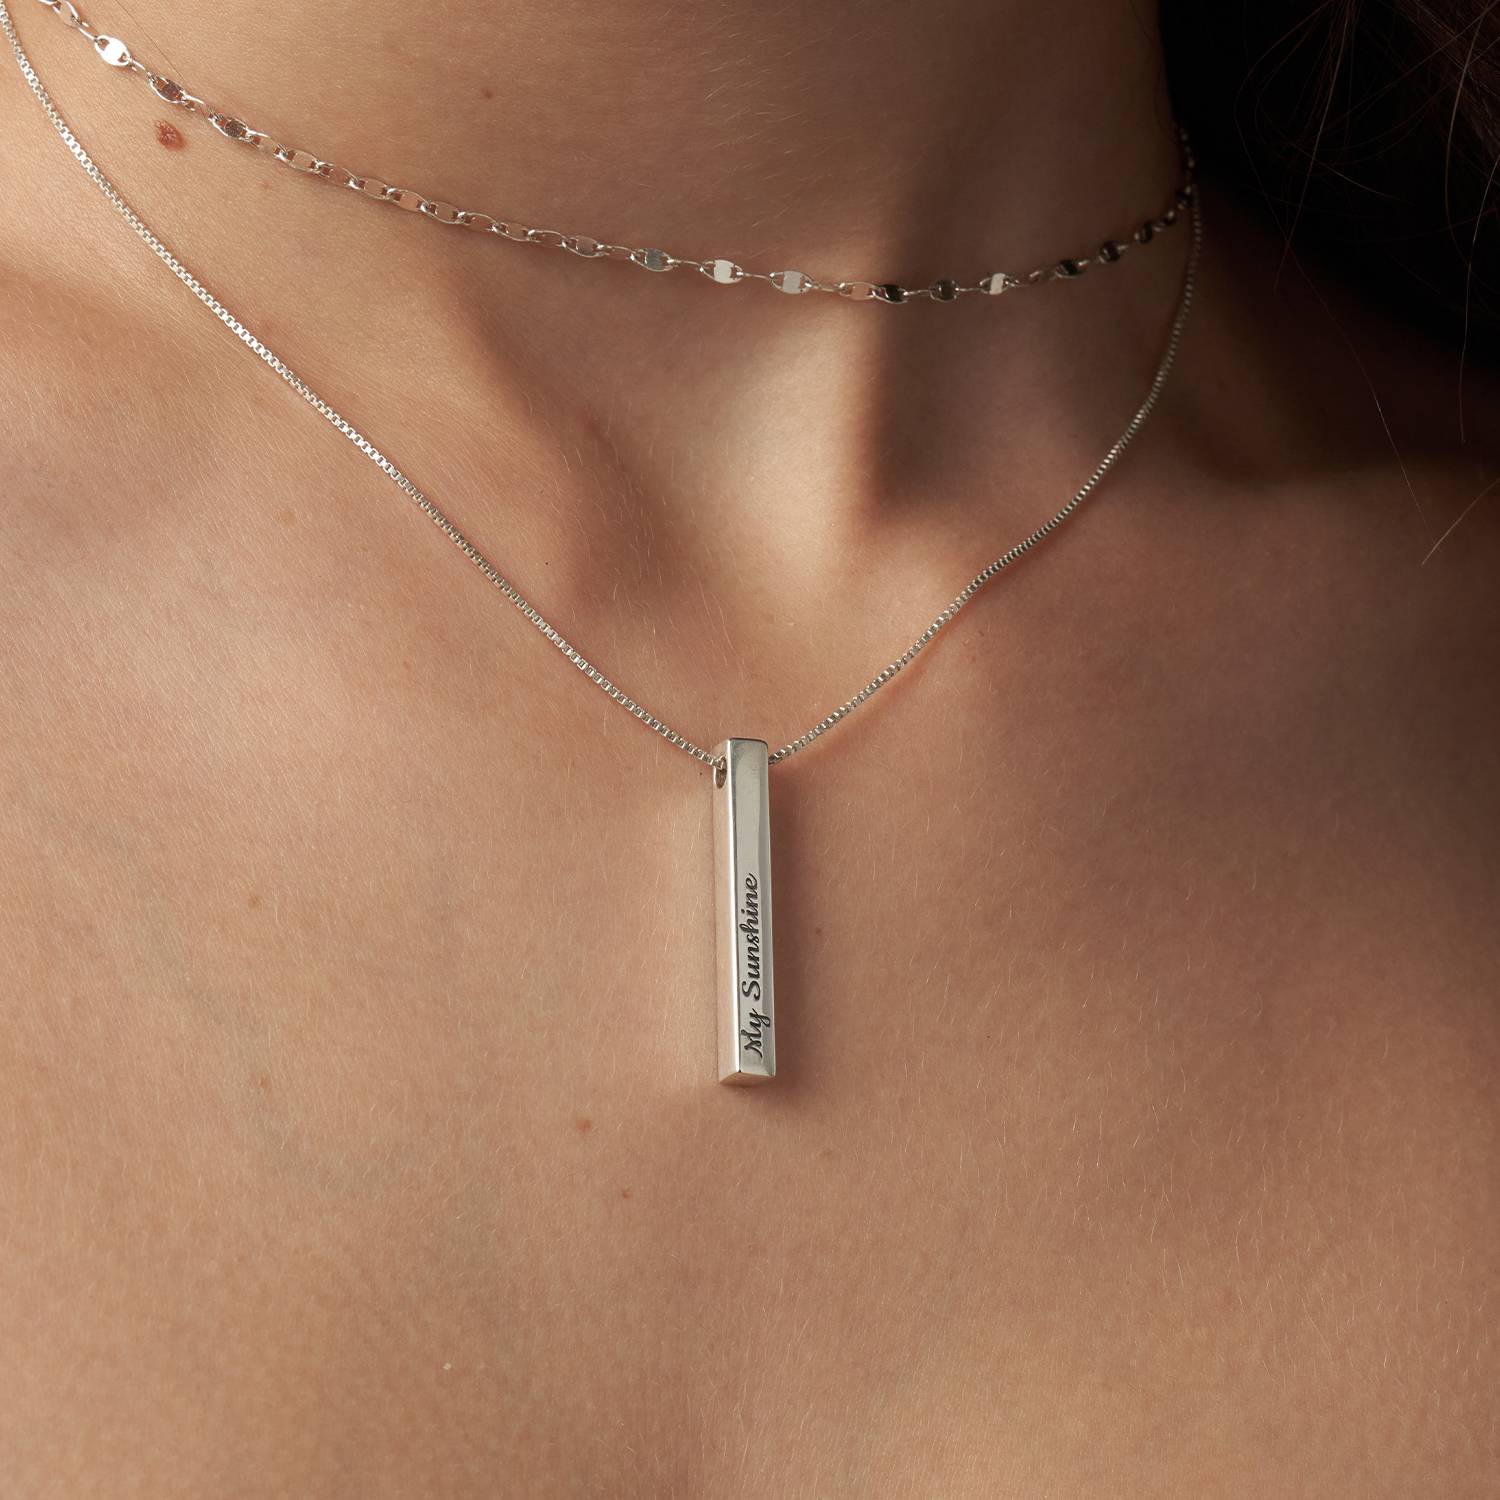 Pillar Bar Necklace - Silver-3 product photo